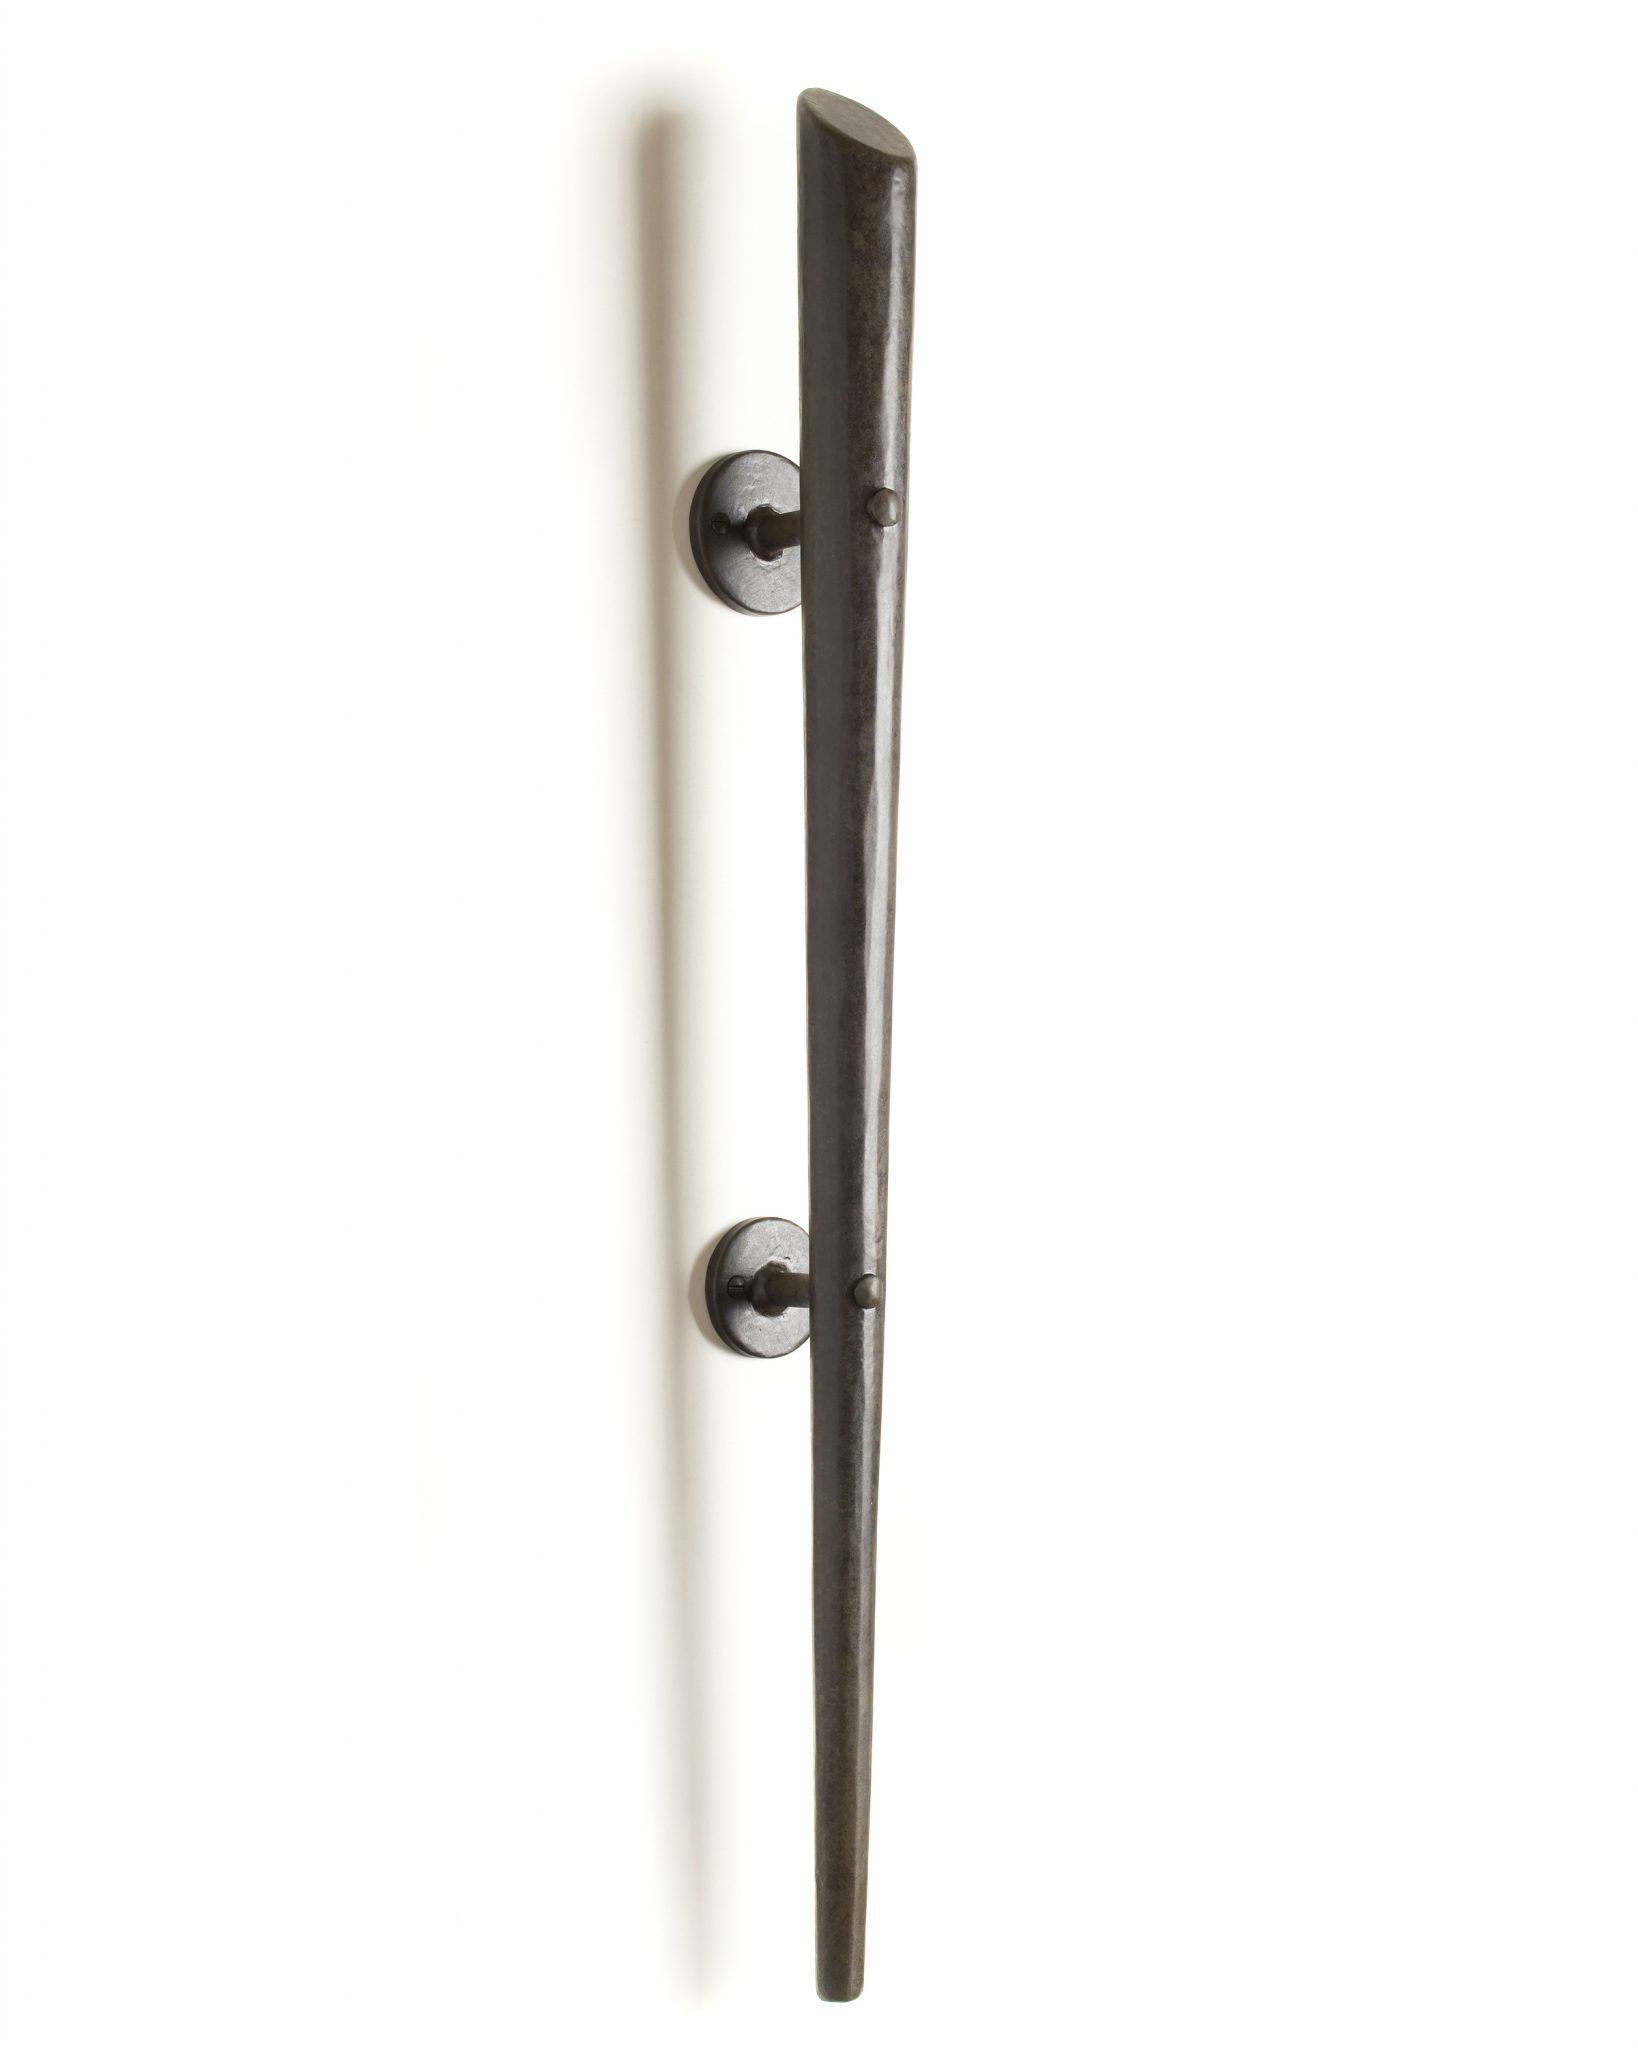 Triton wrought iron door handle